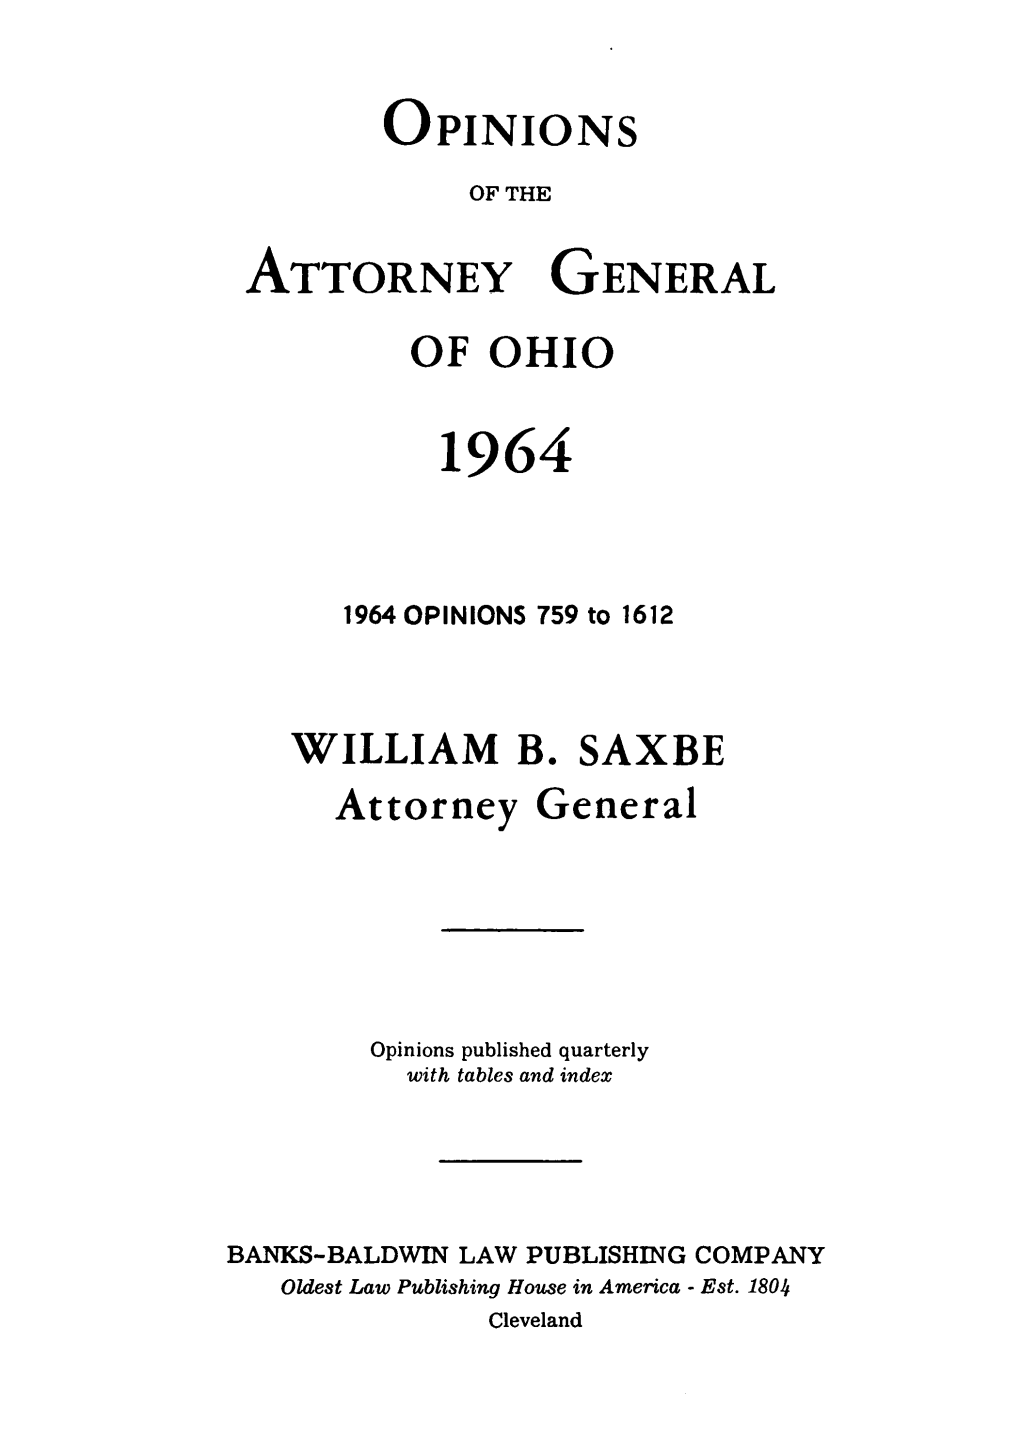 1964 Supplemental Material